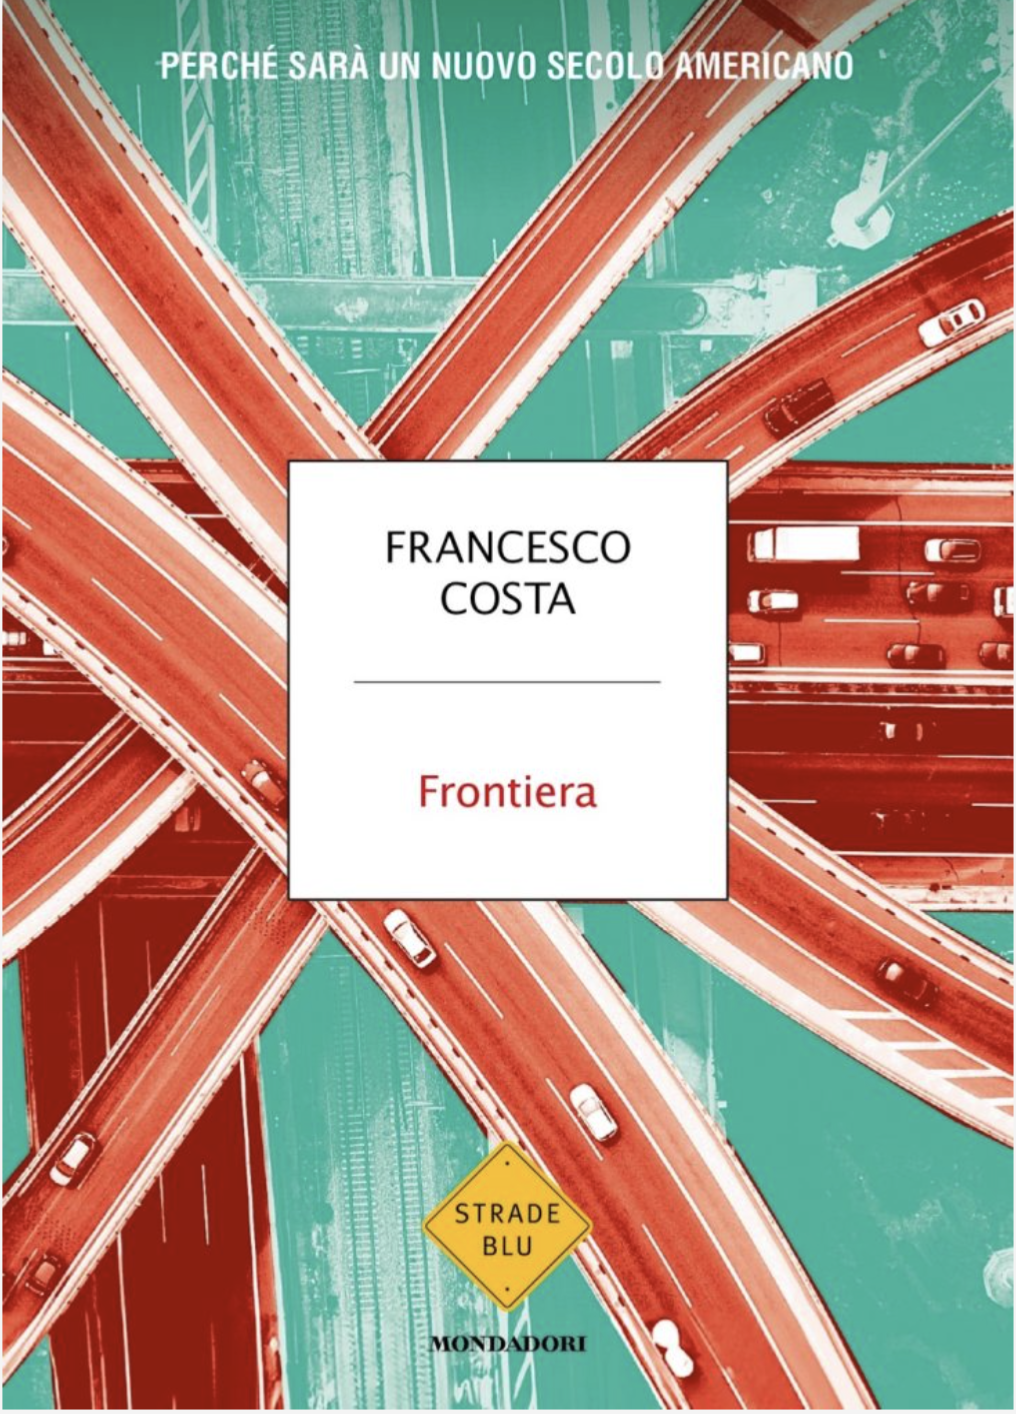 Francesco Costa: Frontiera (Italiano language, Mondadori)